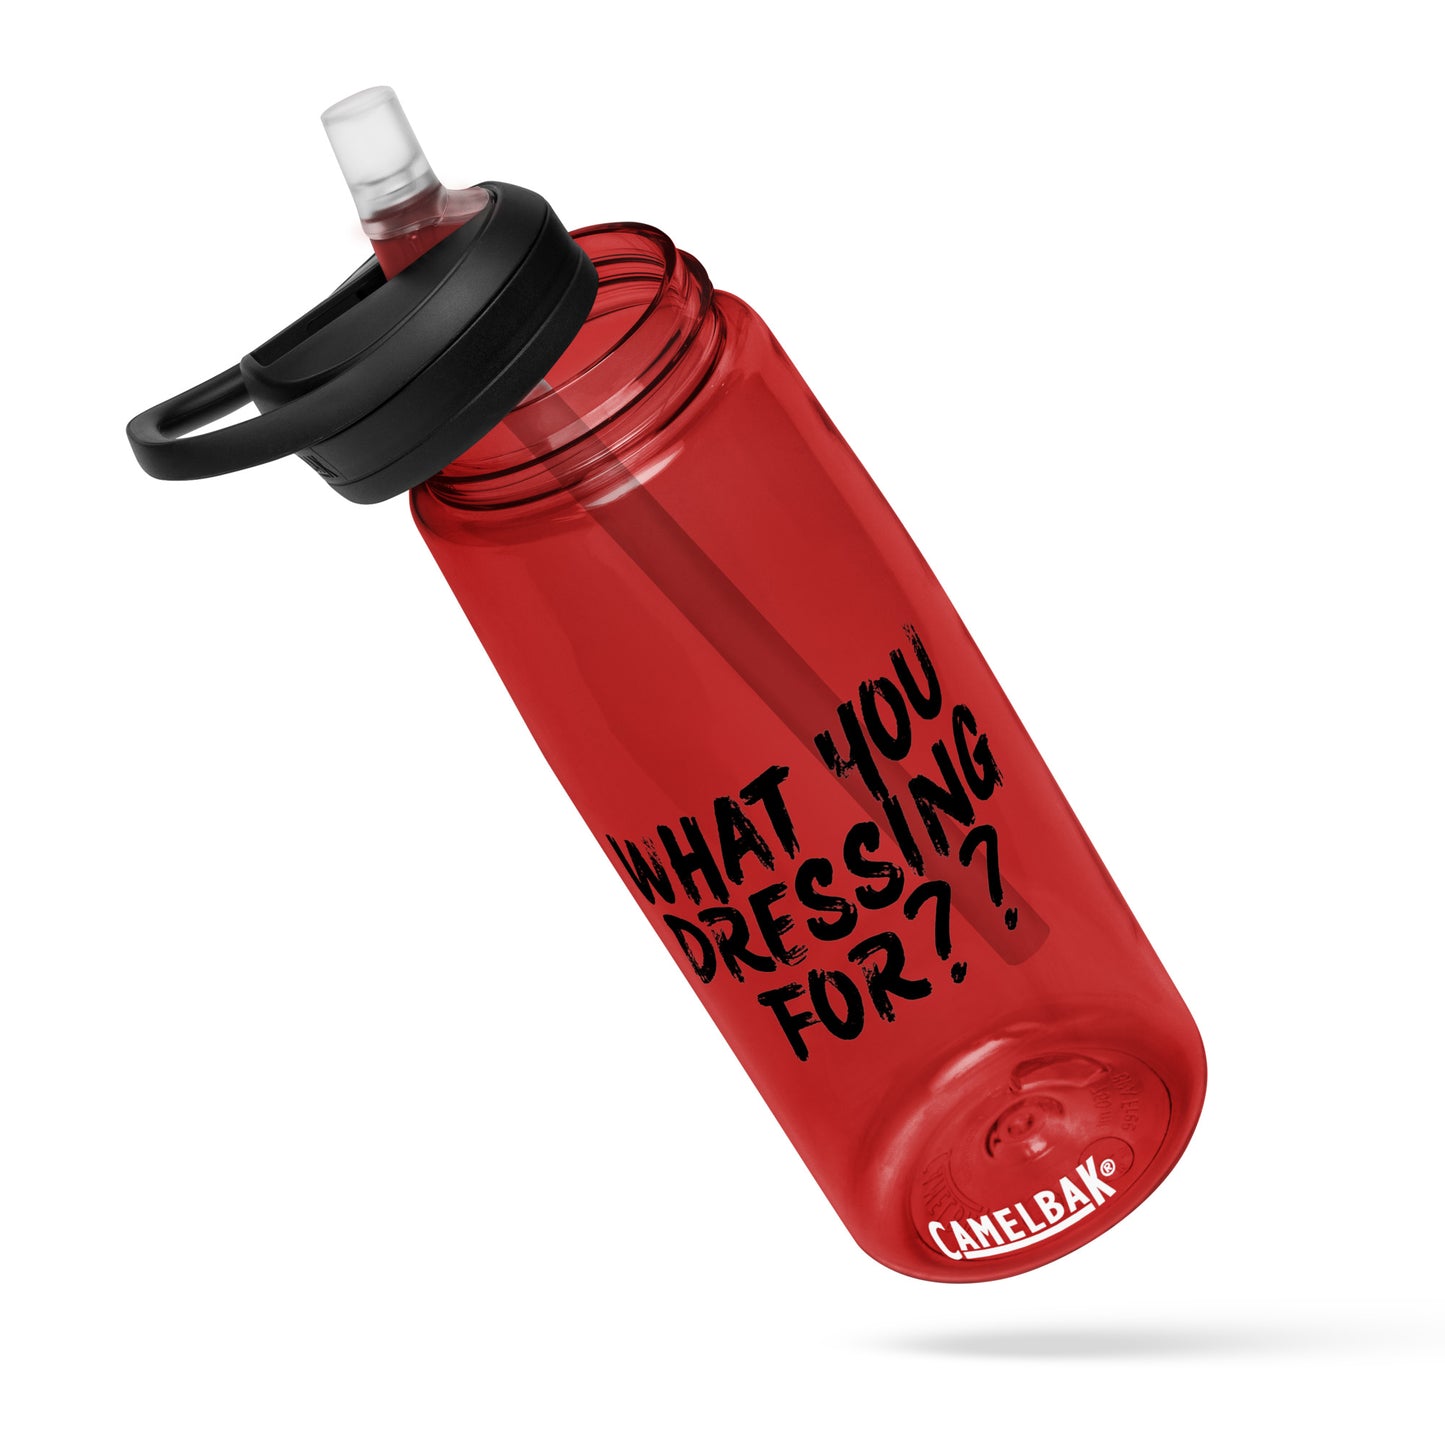 Sports "WYDF?" water bottle